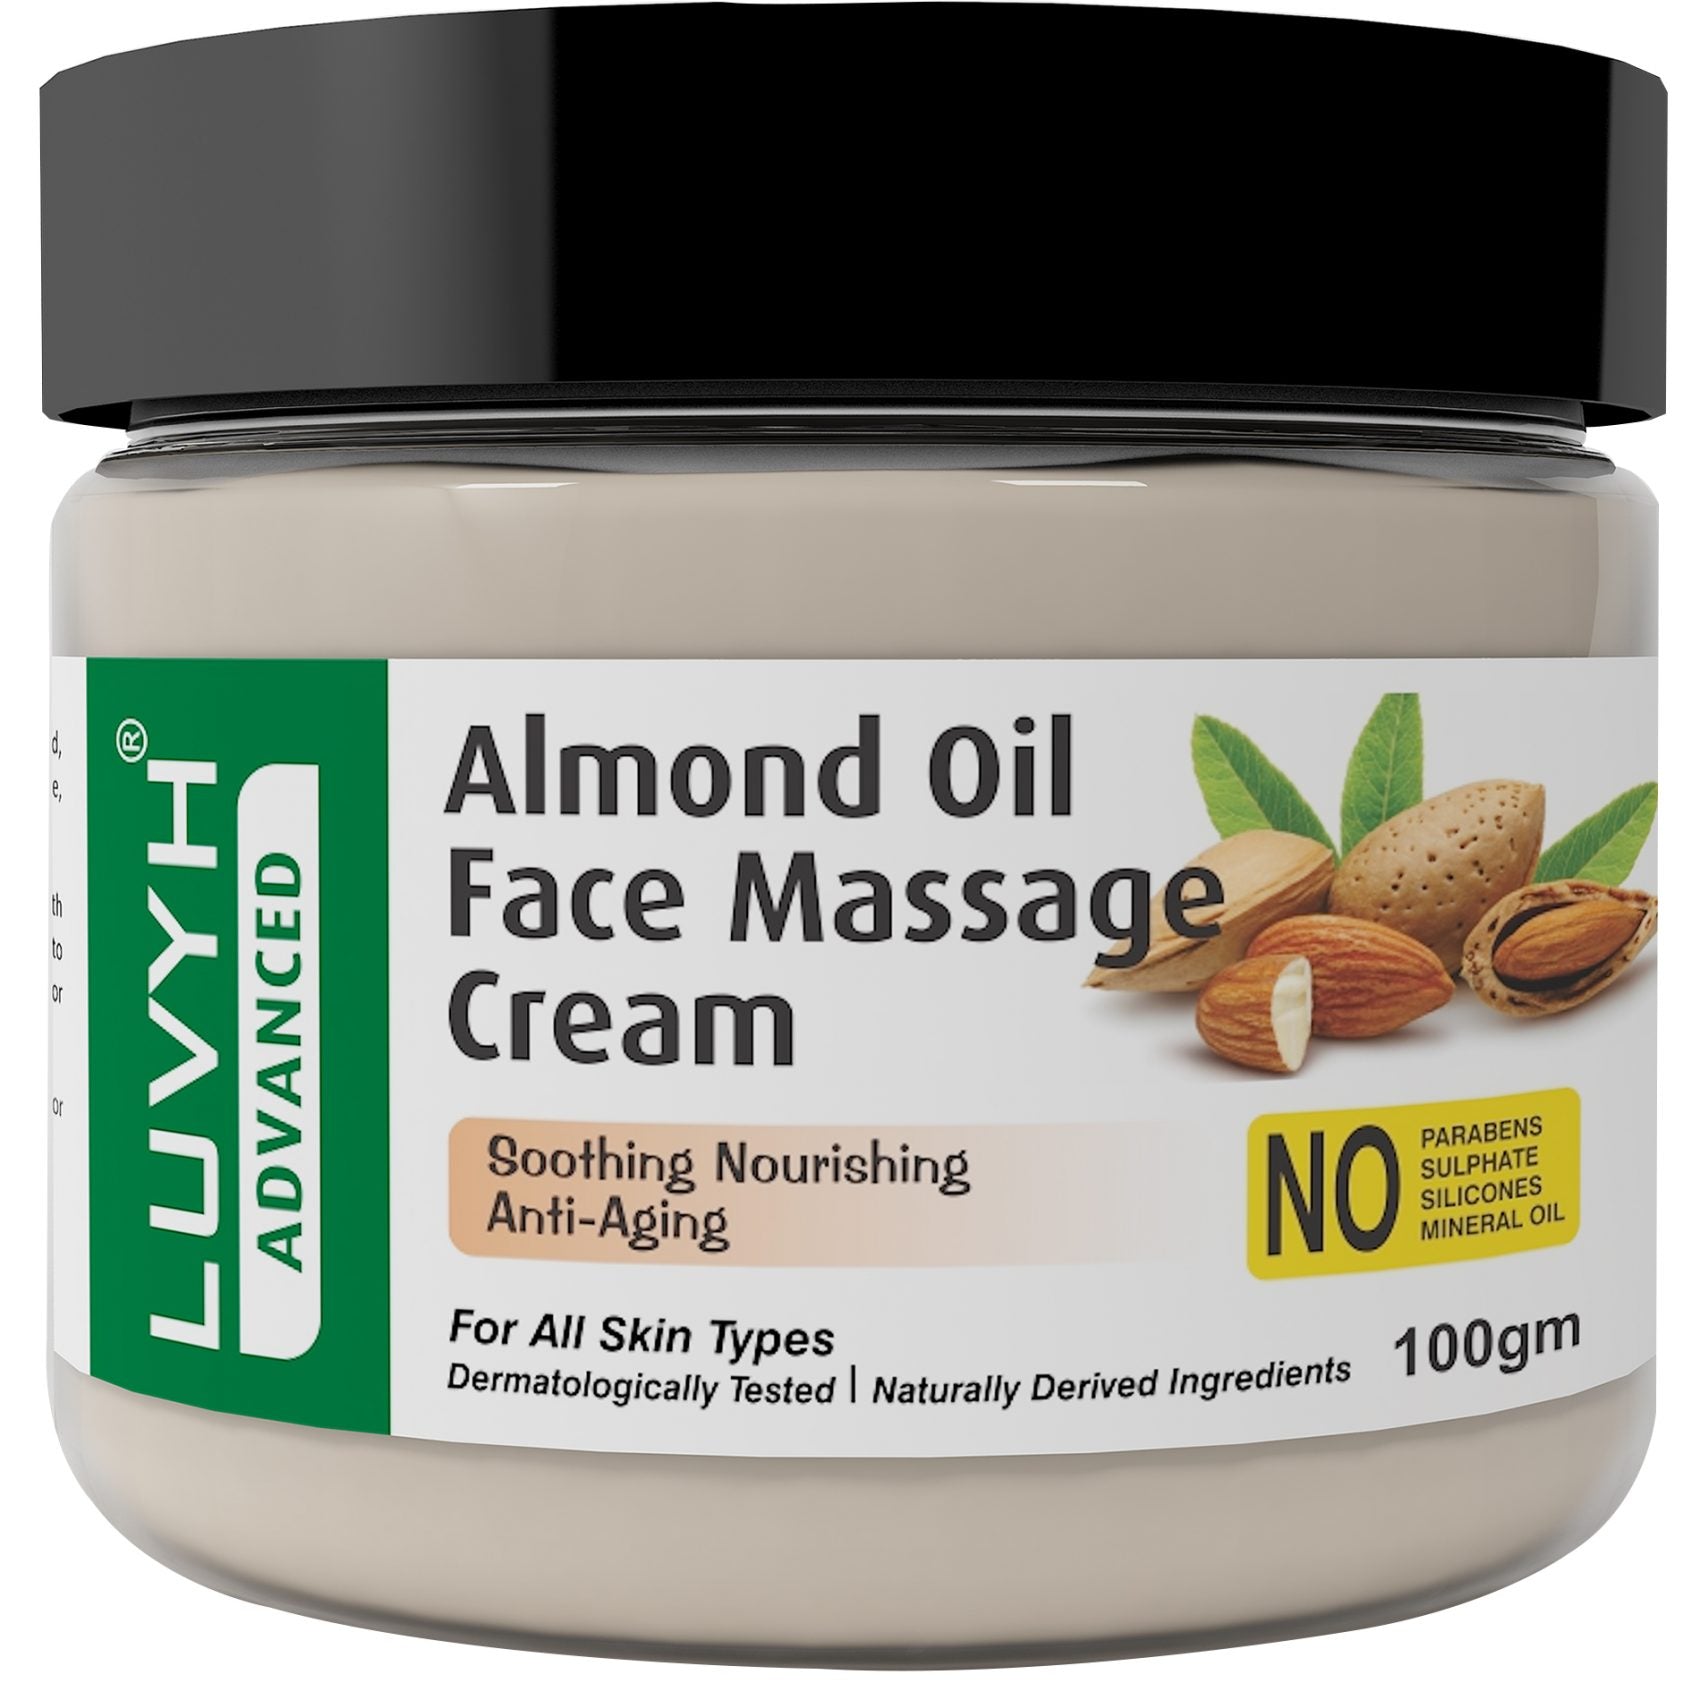 Almond Oil Face Massage Cream